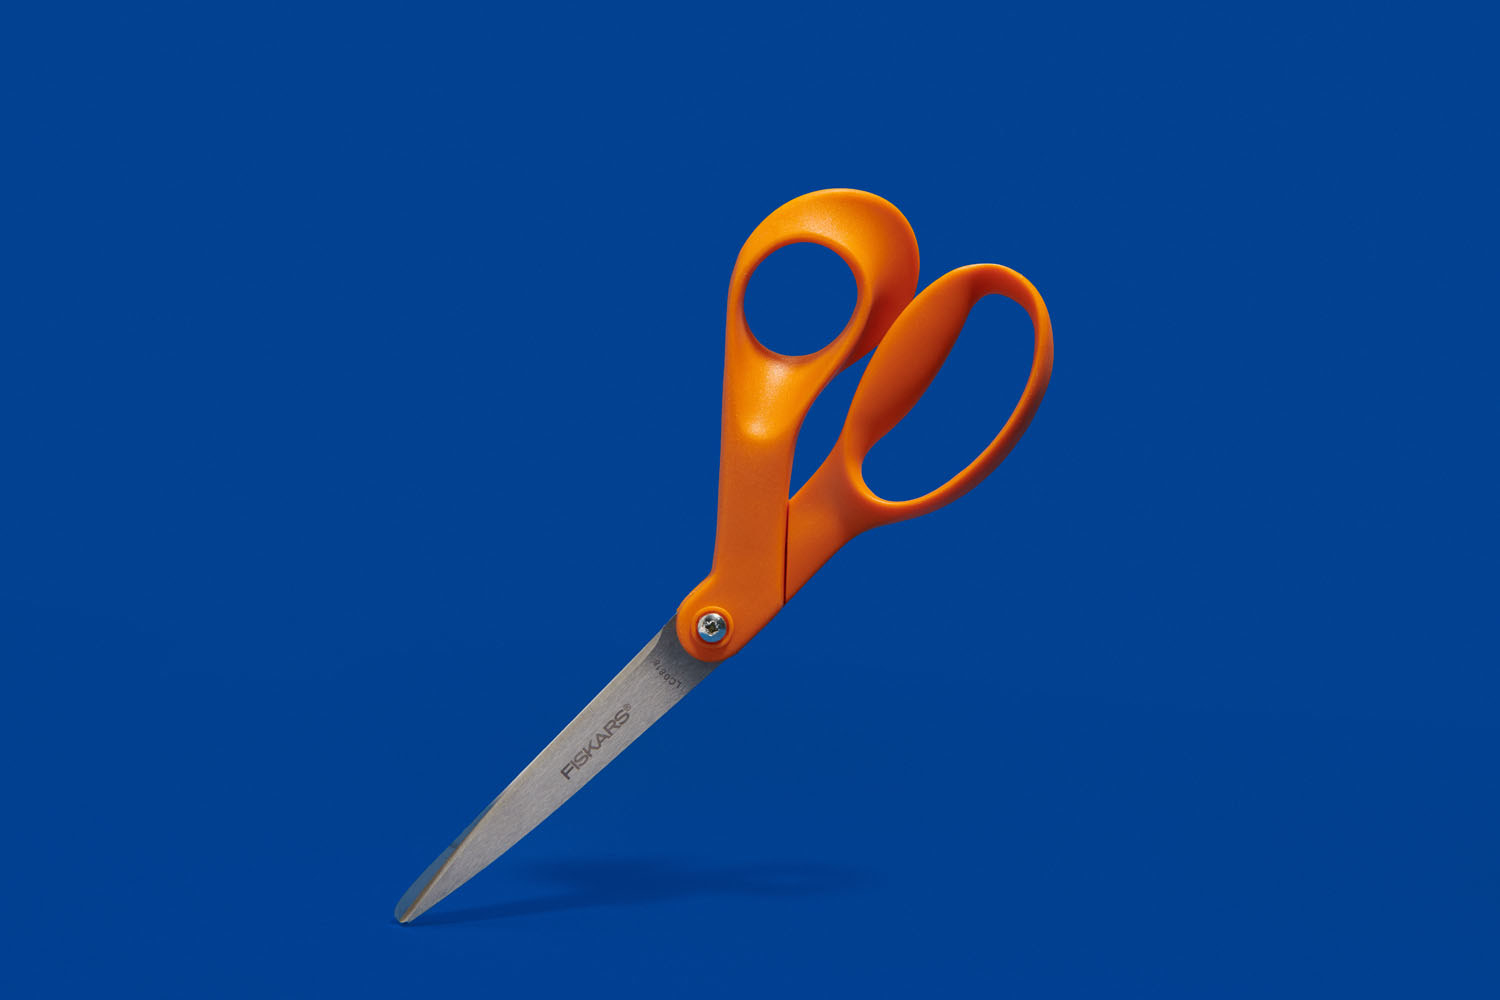 High Quality Scissors